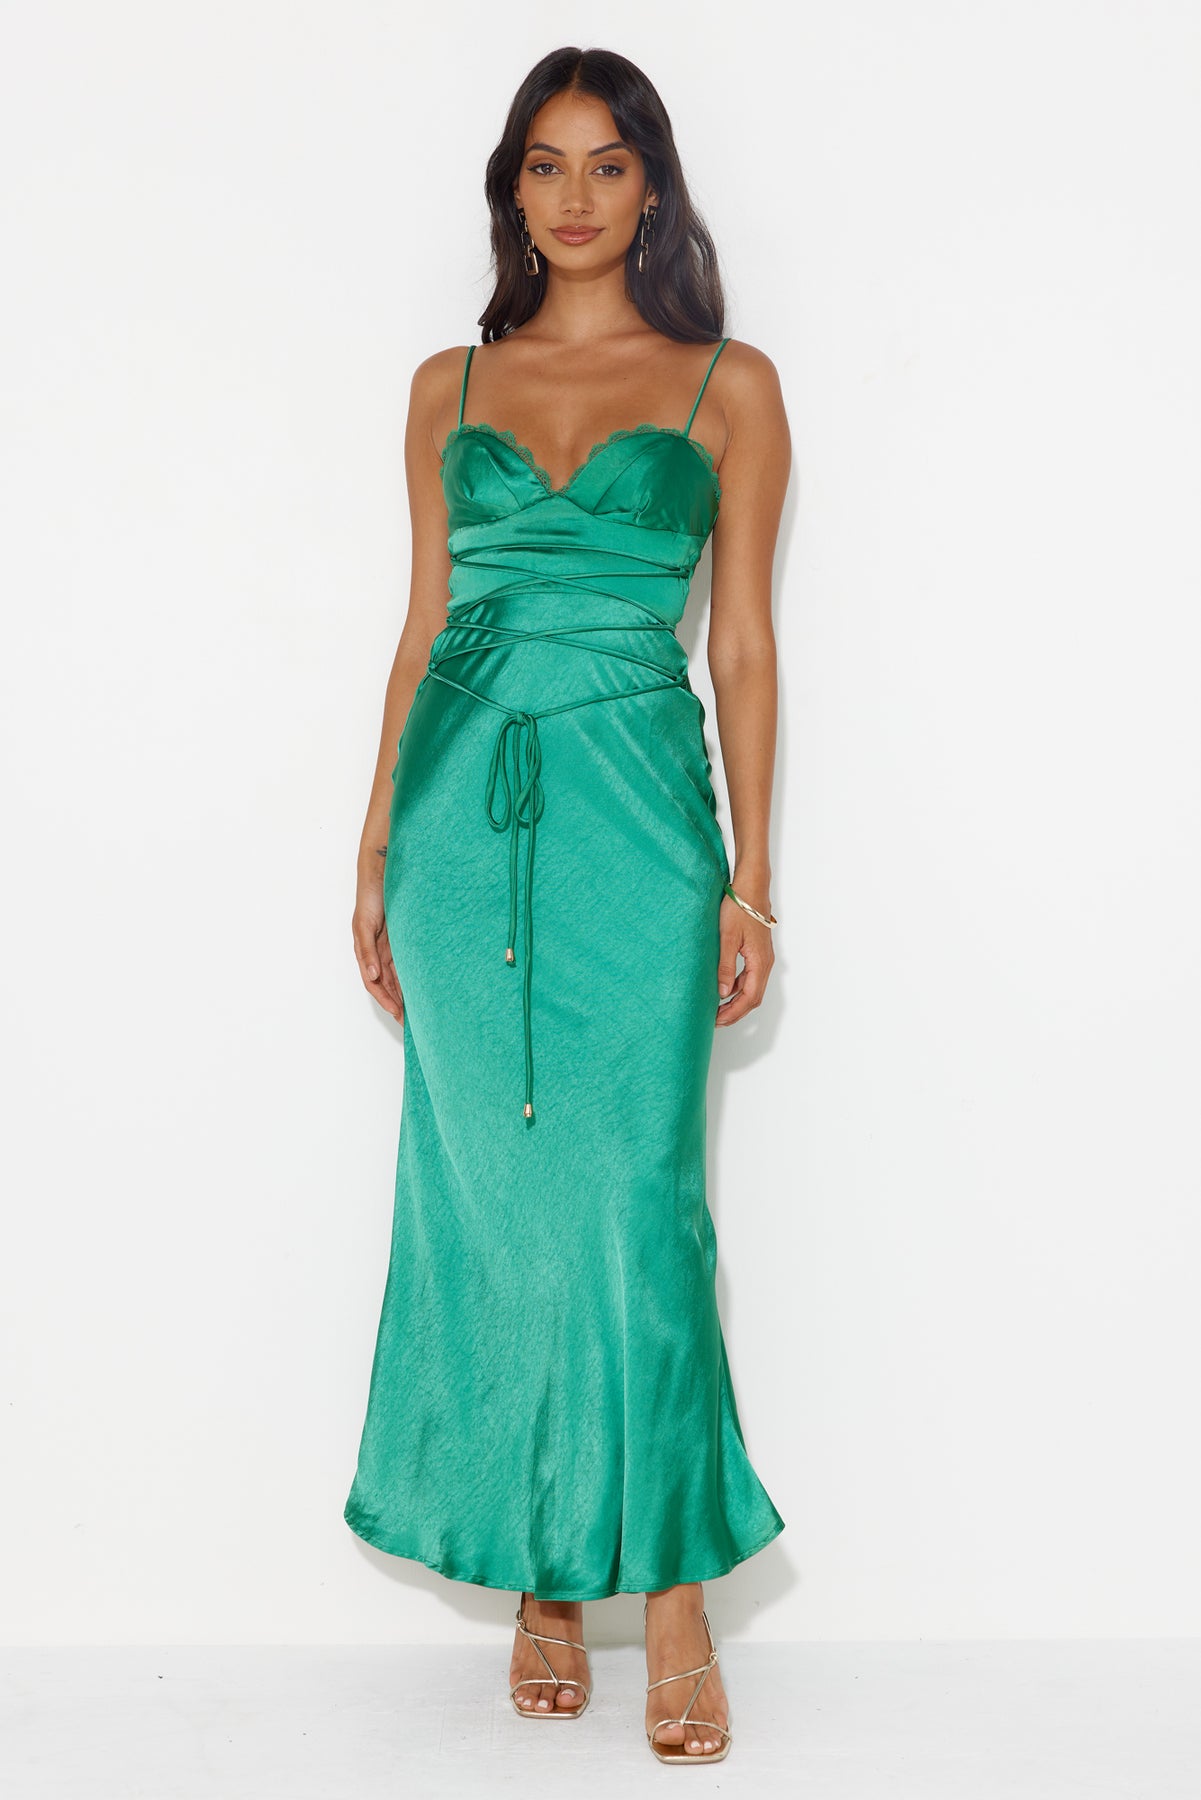 Shop Formal Dress - Dancing Pixie Satin Maxi Dress Green secondary image